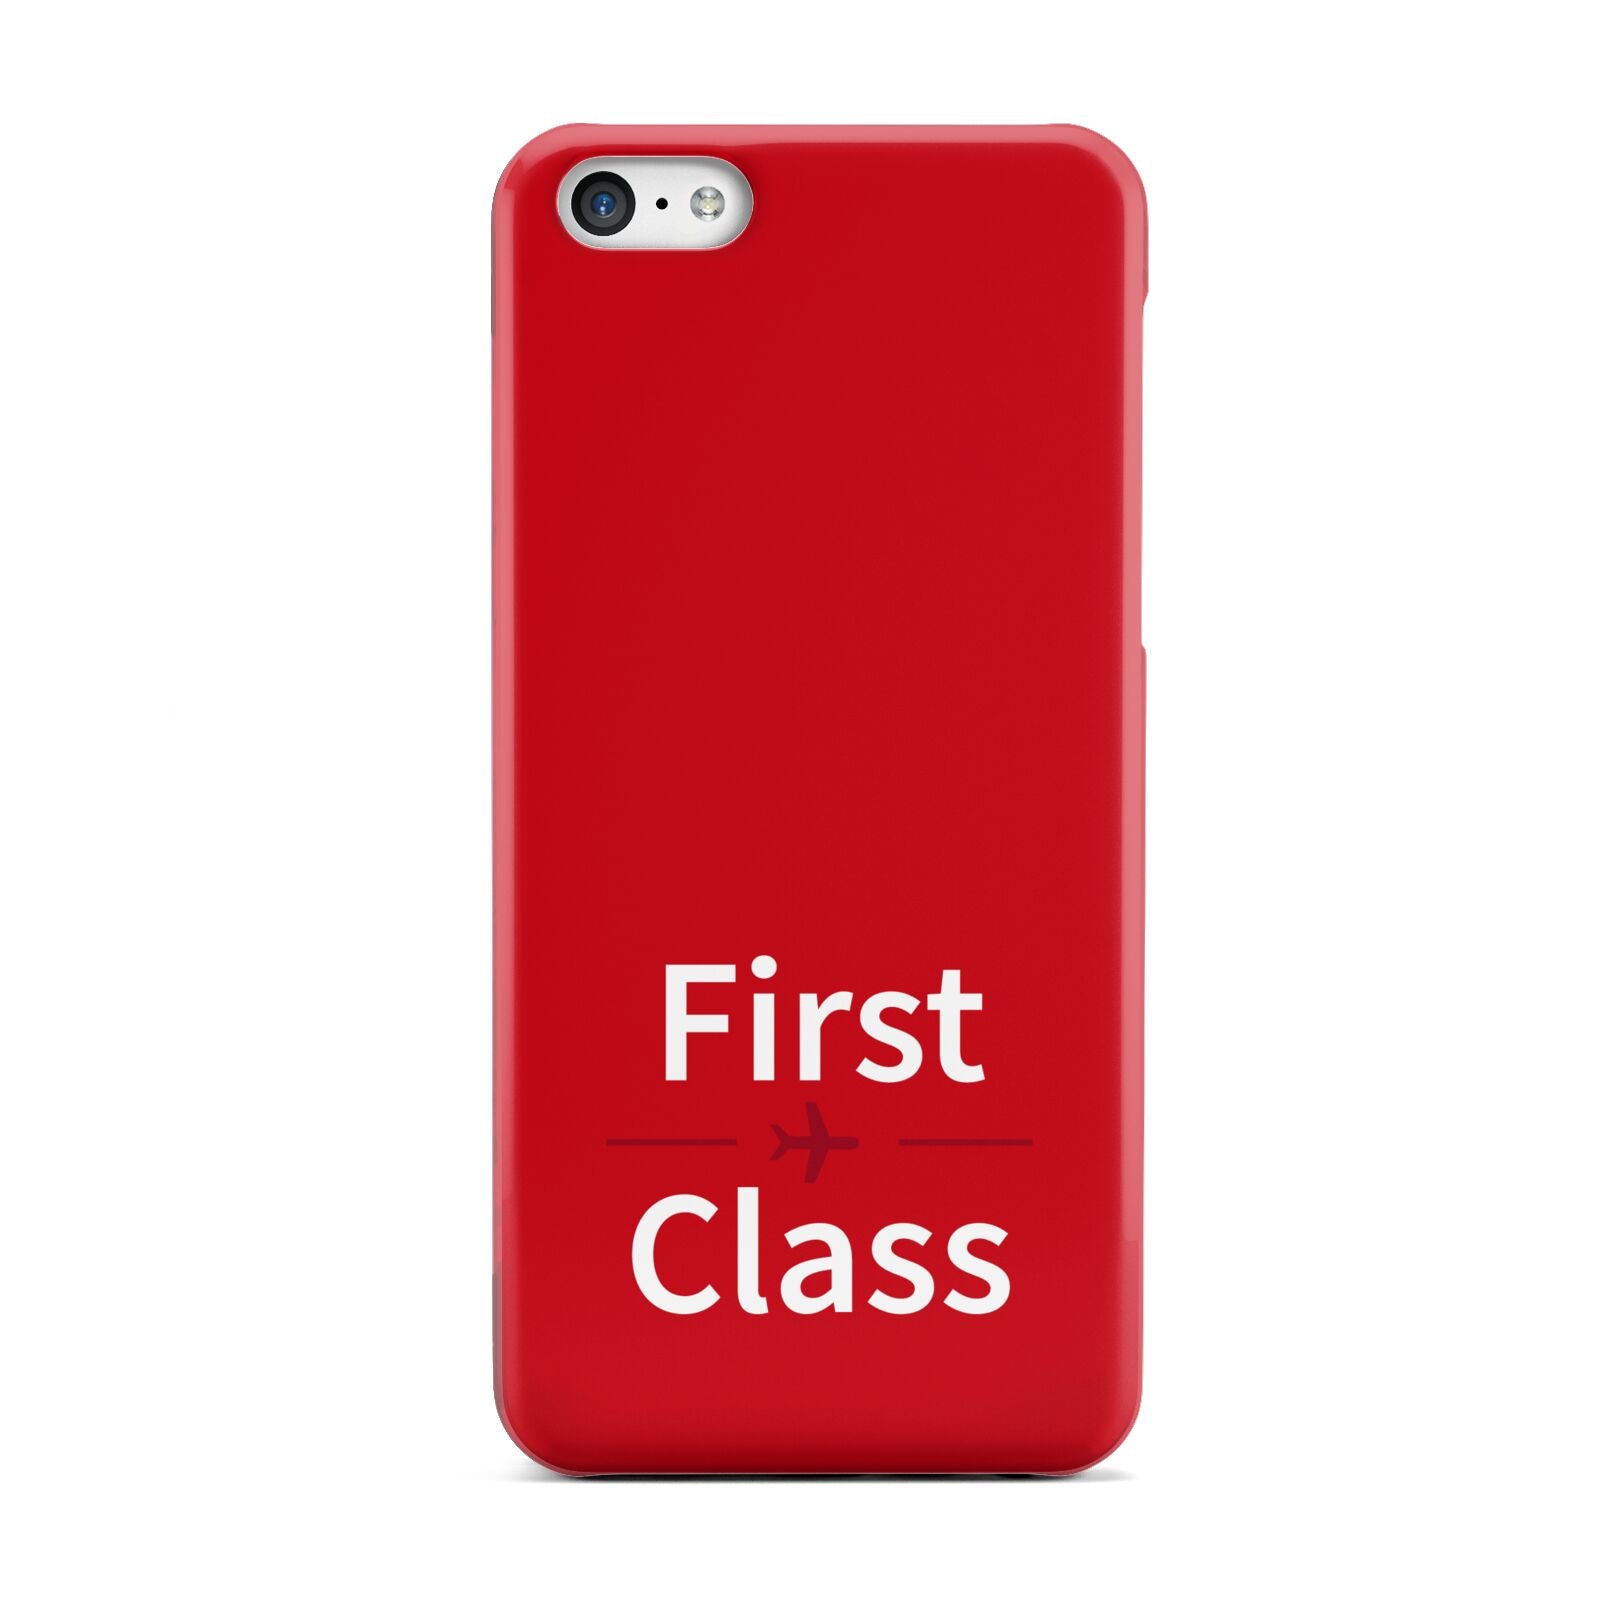 First Class Apple iPhone 5c Case